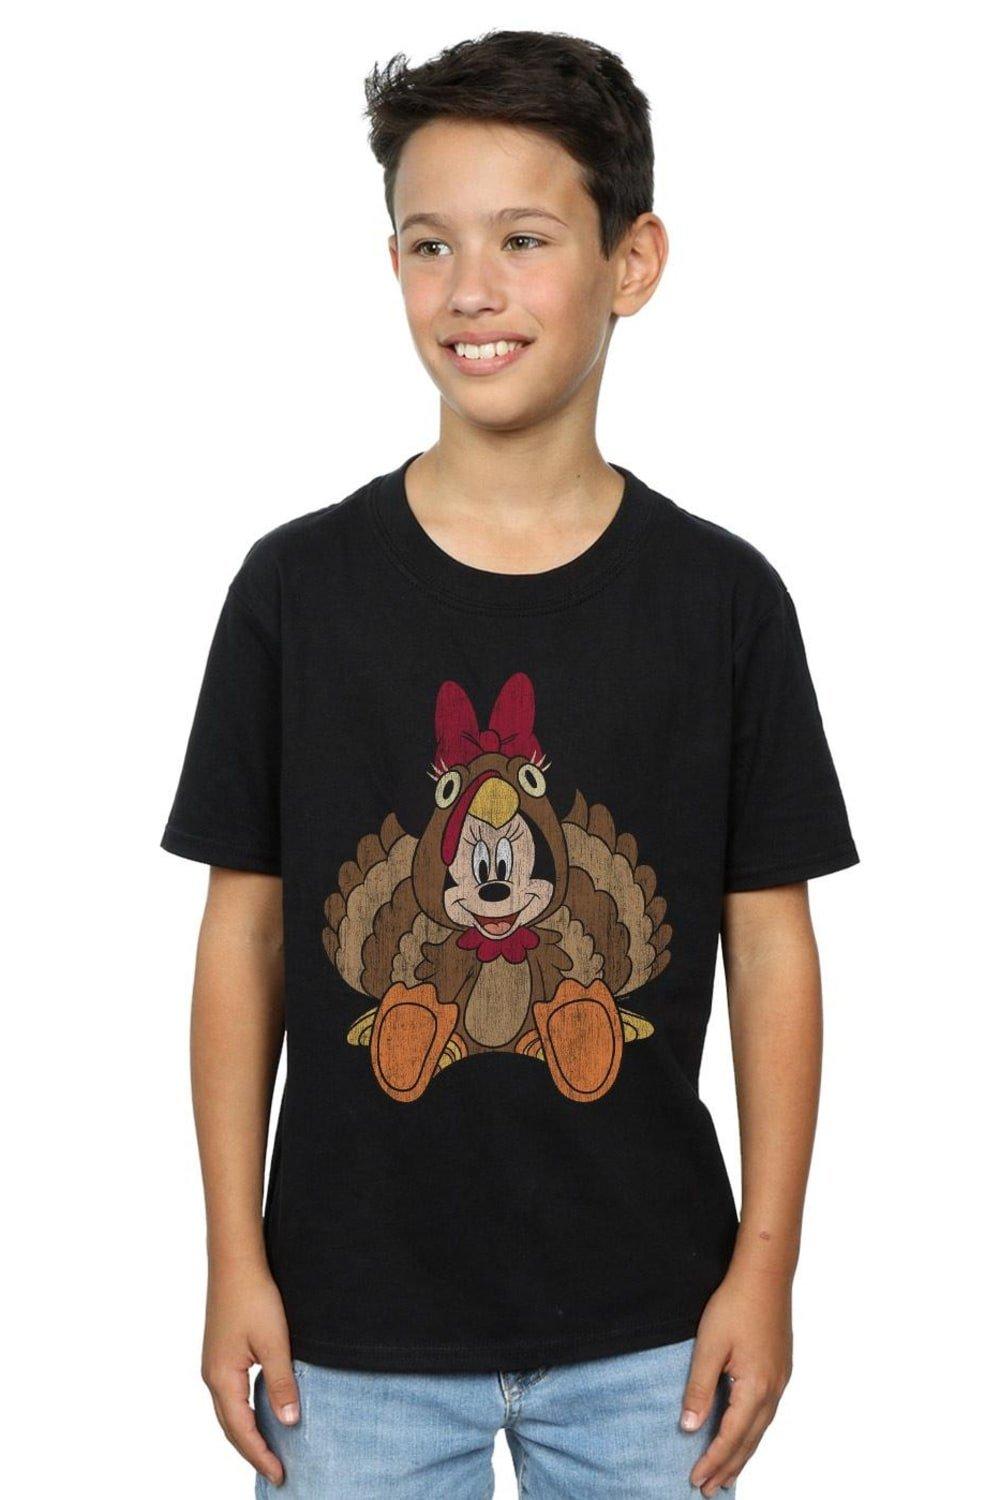 Minnie Mouse Thanksgiving Turkey Costume T-Shirt